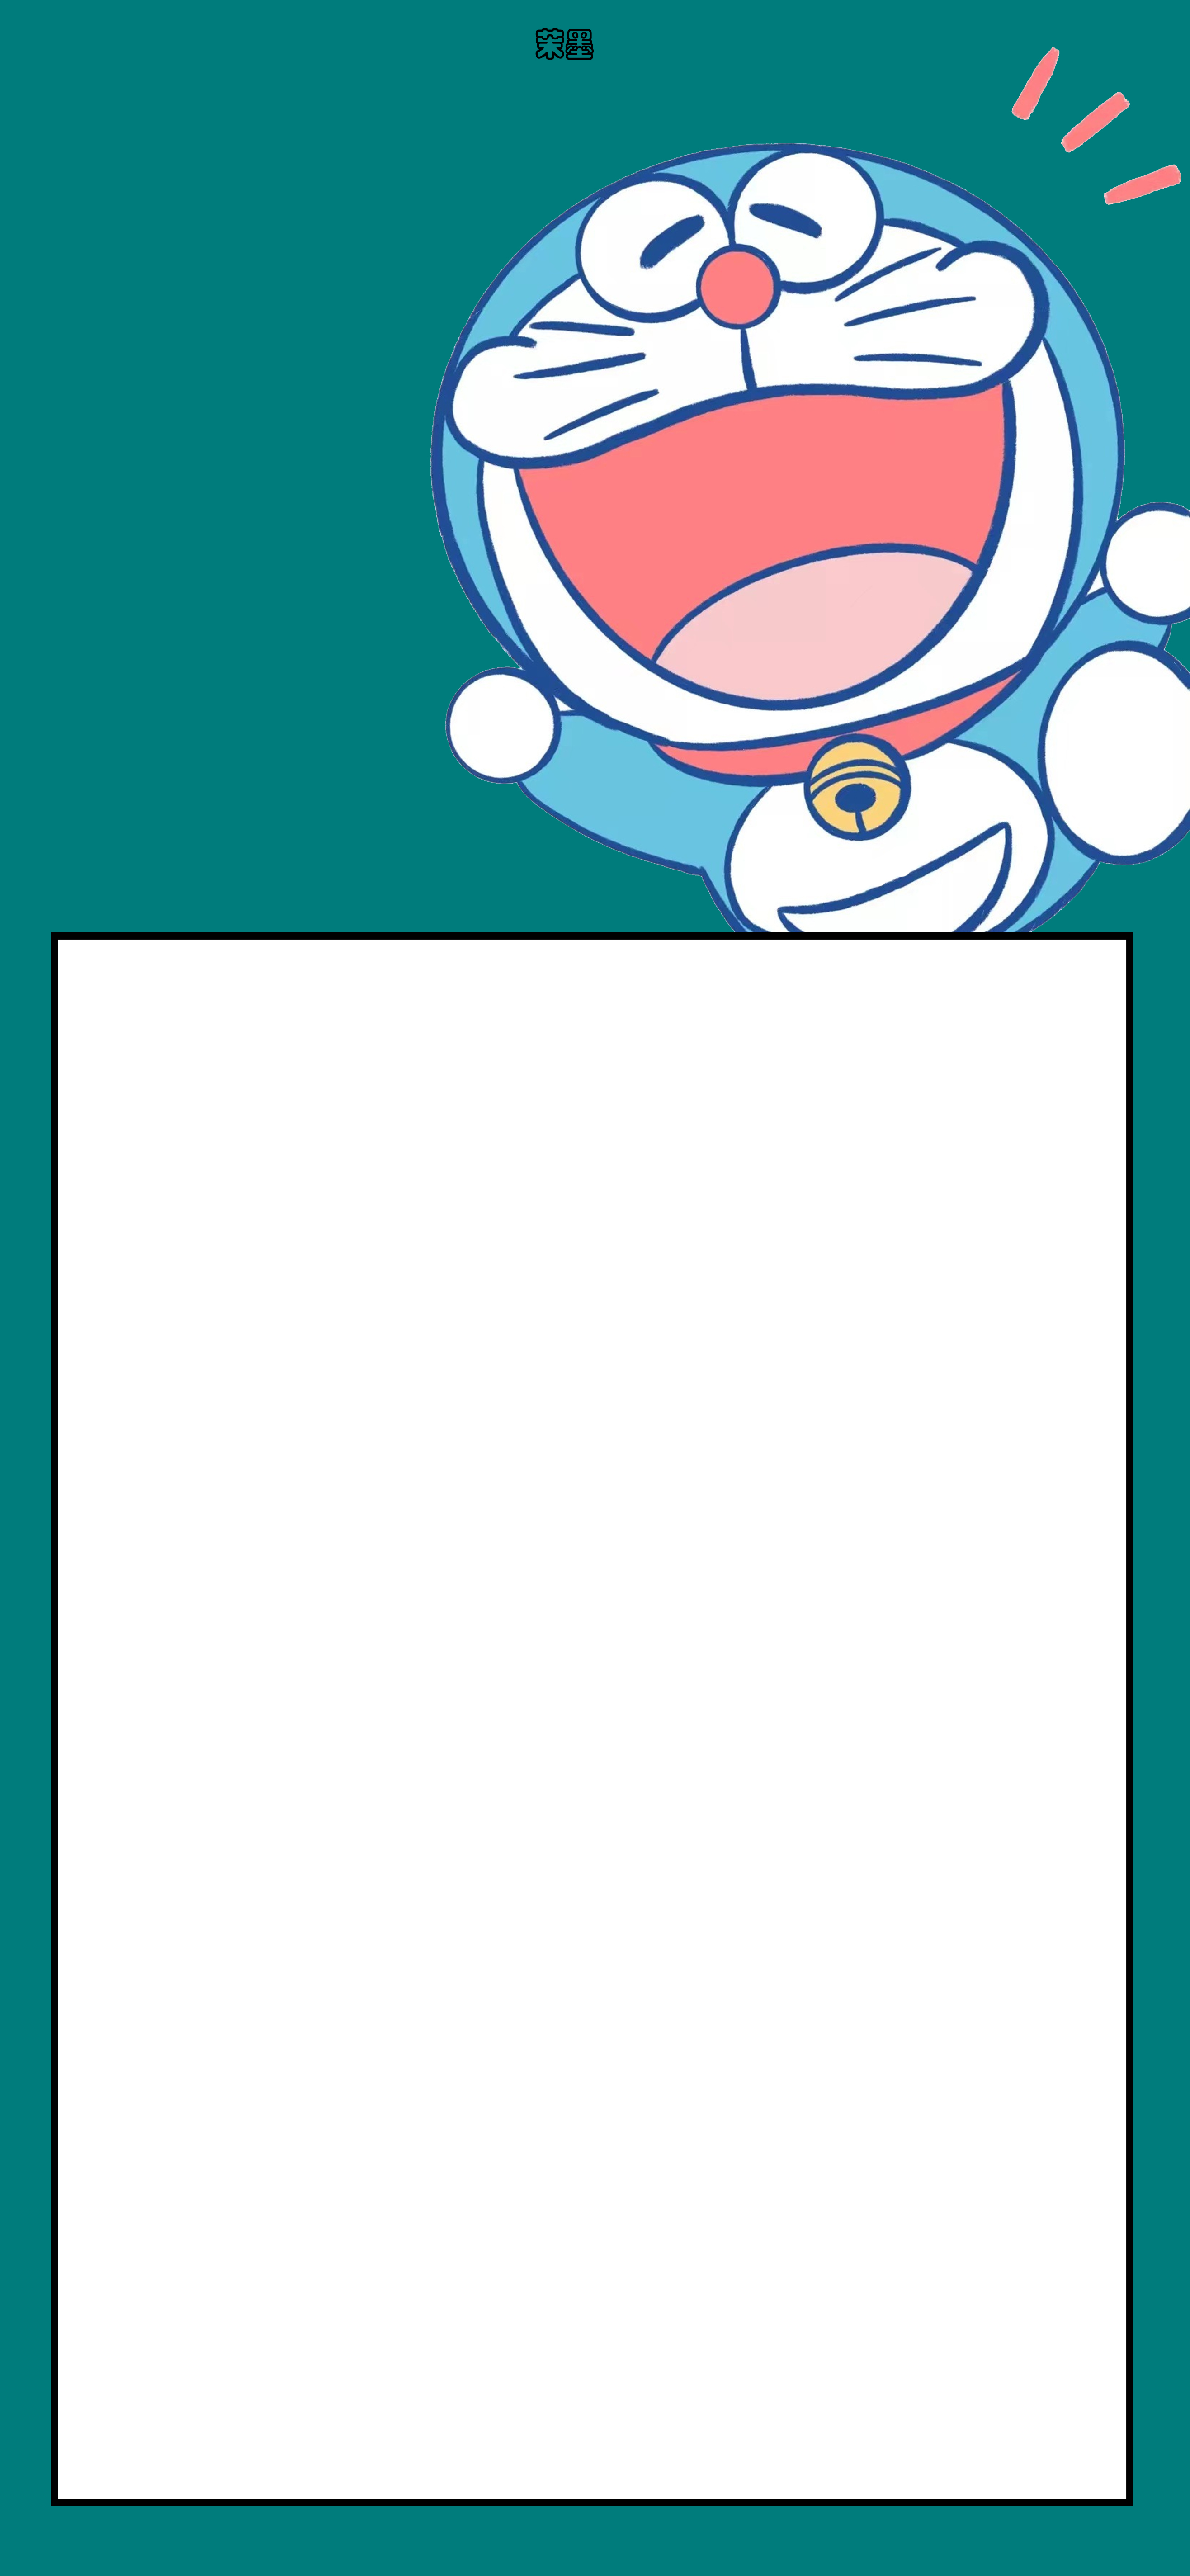 A group of mobile phone desktop wallpaper cute Doraemon - iMedia